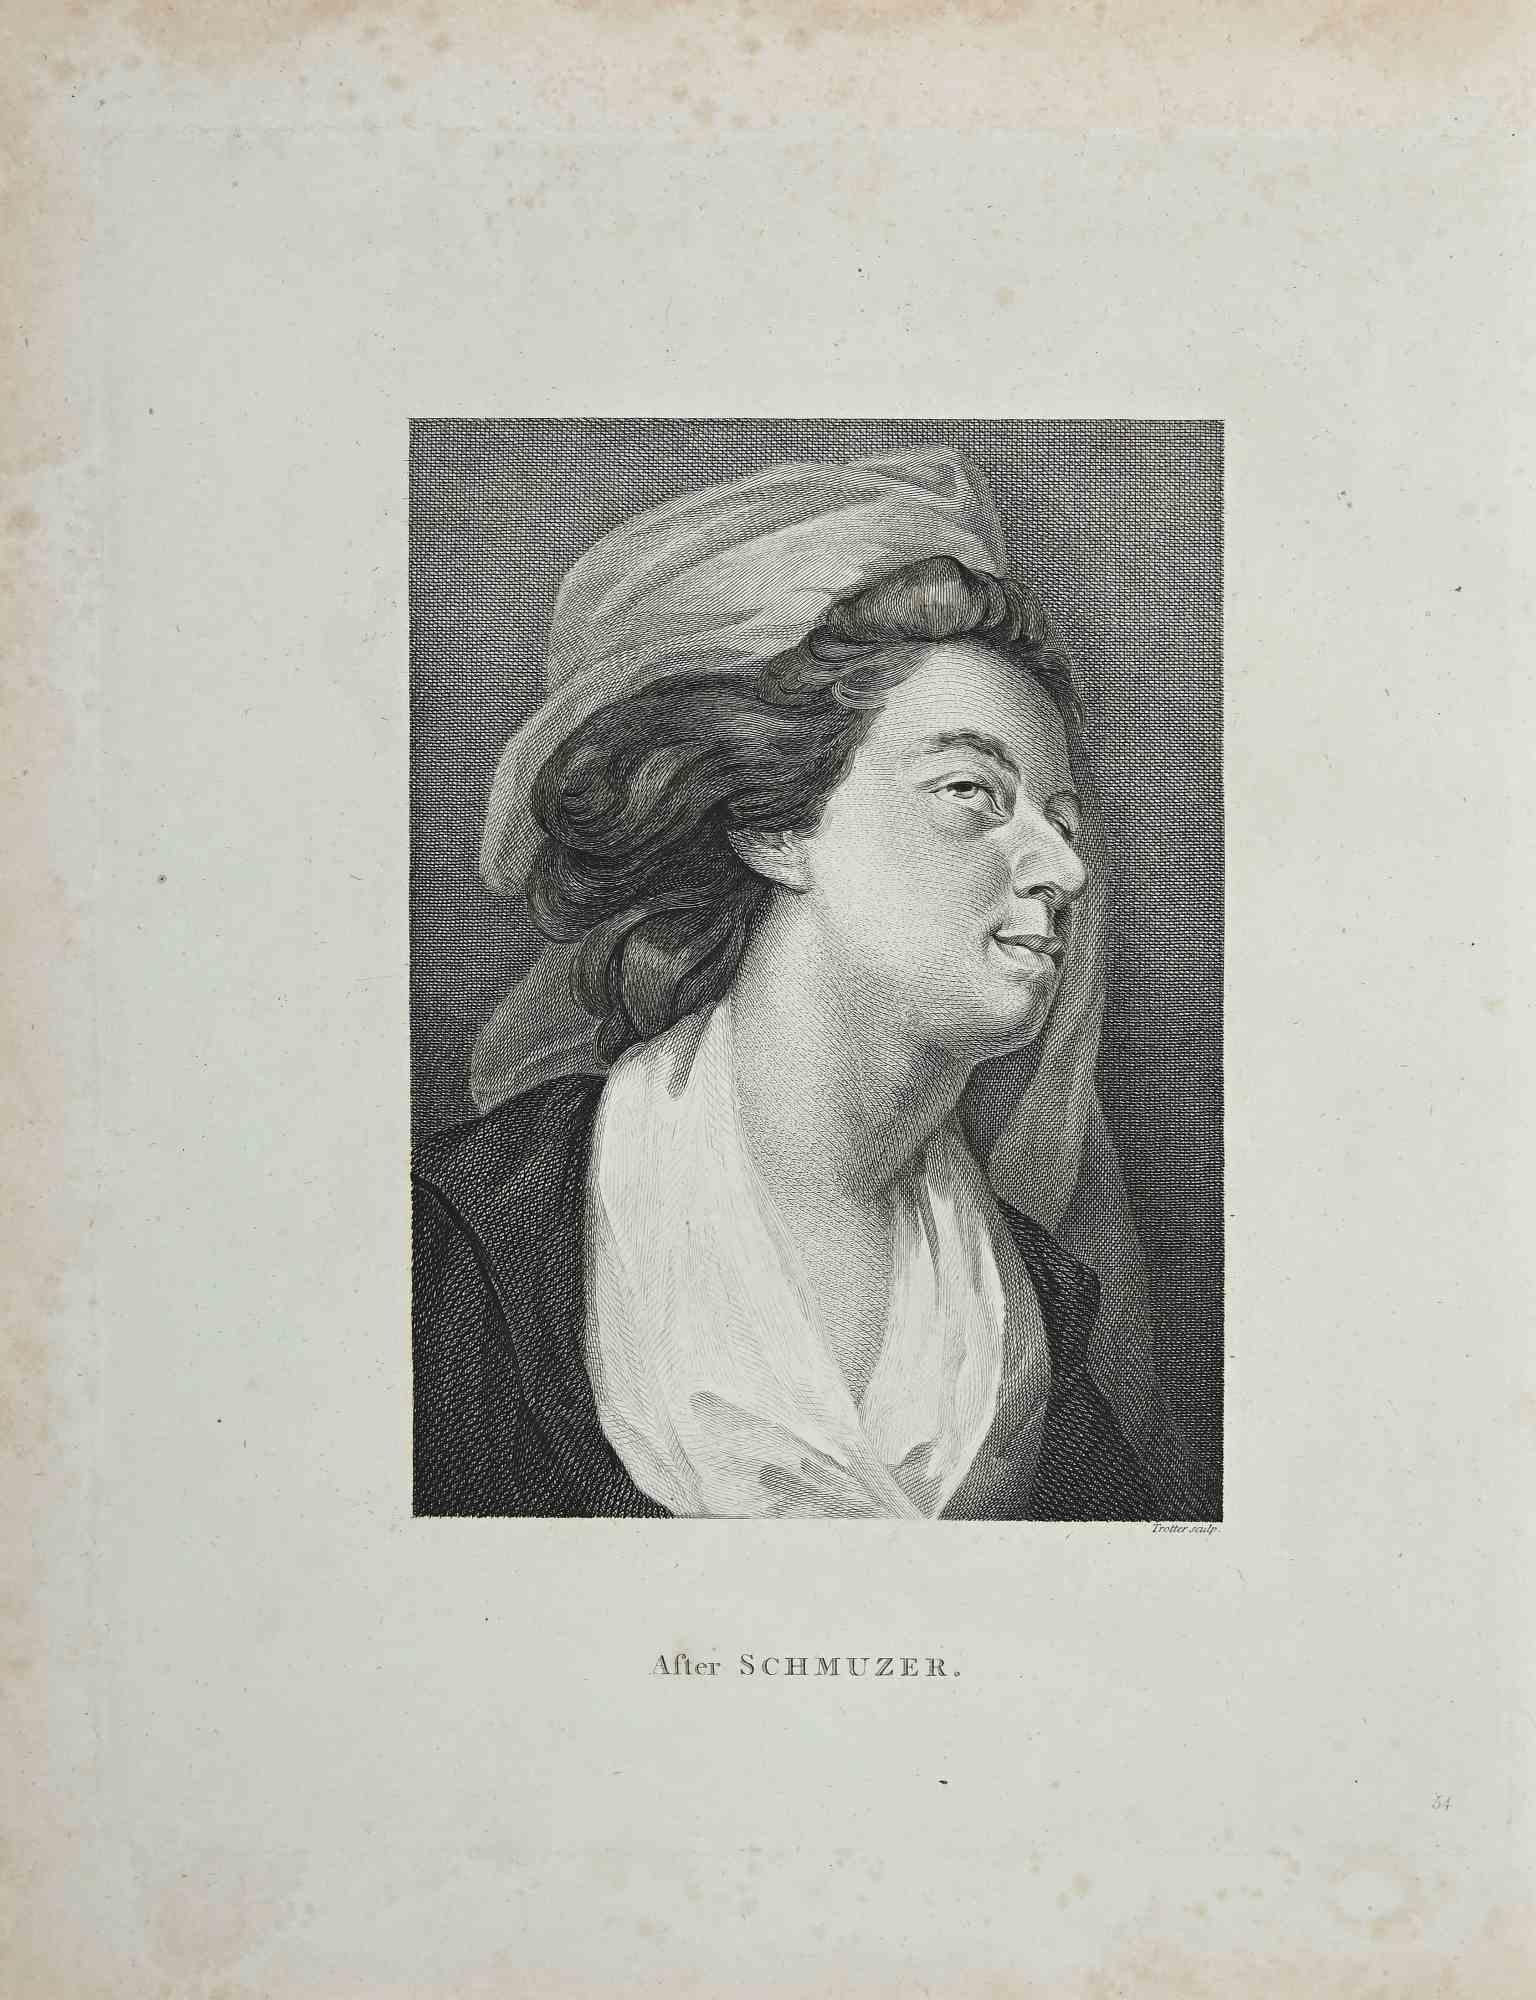 Portrait After Schmuzer - Original Etching After Thomas Trotter - 1810